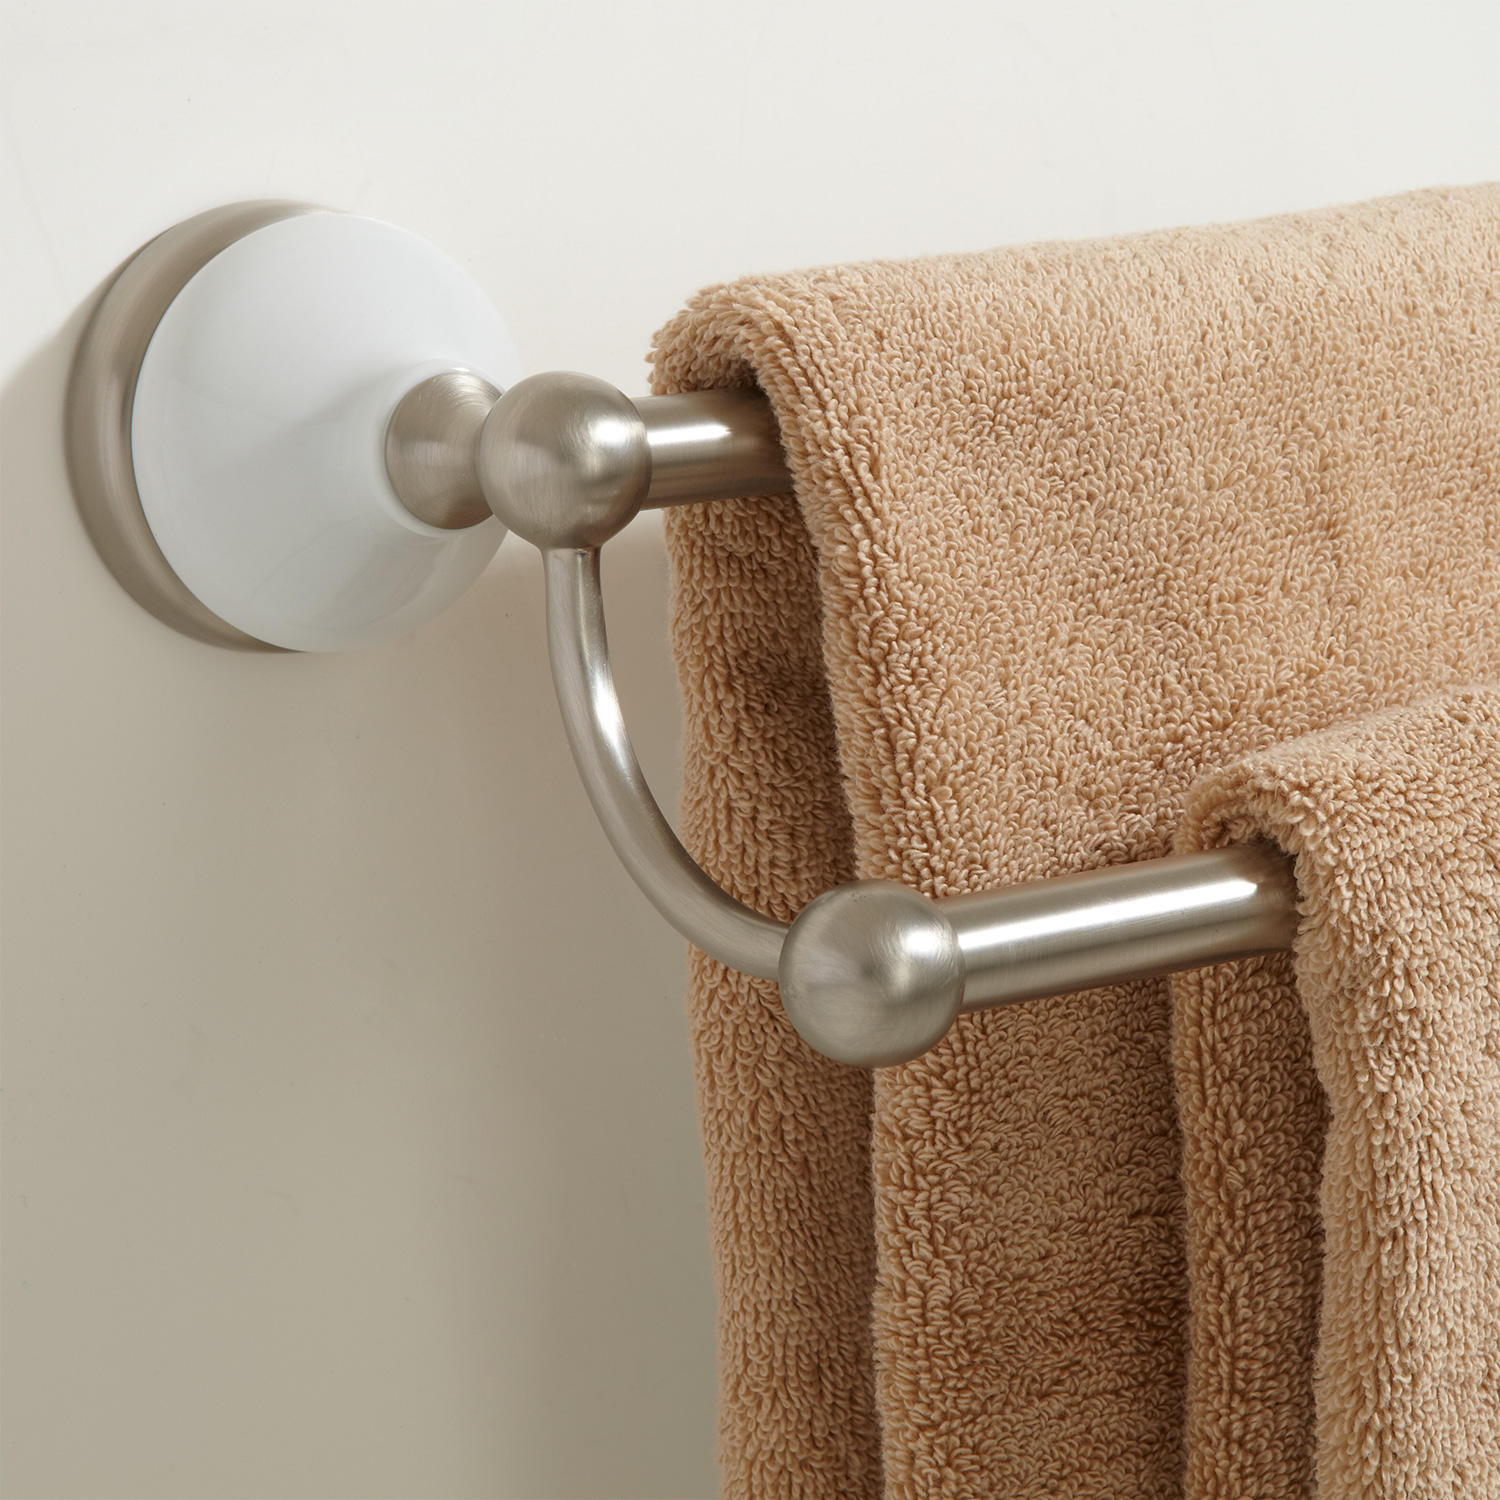 Best ideas about Bathroom Towel Bars
. Save or Pin Houston Double Towel Bar Bathroom Now.